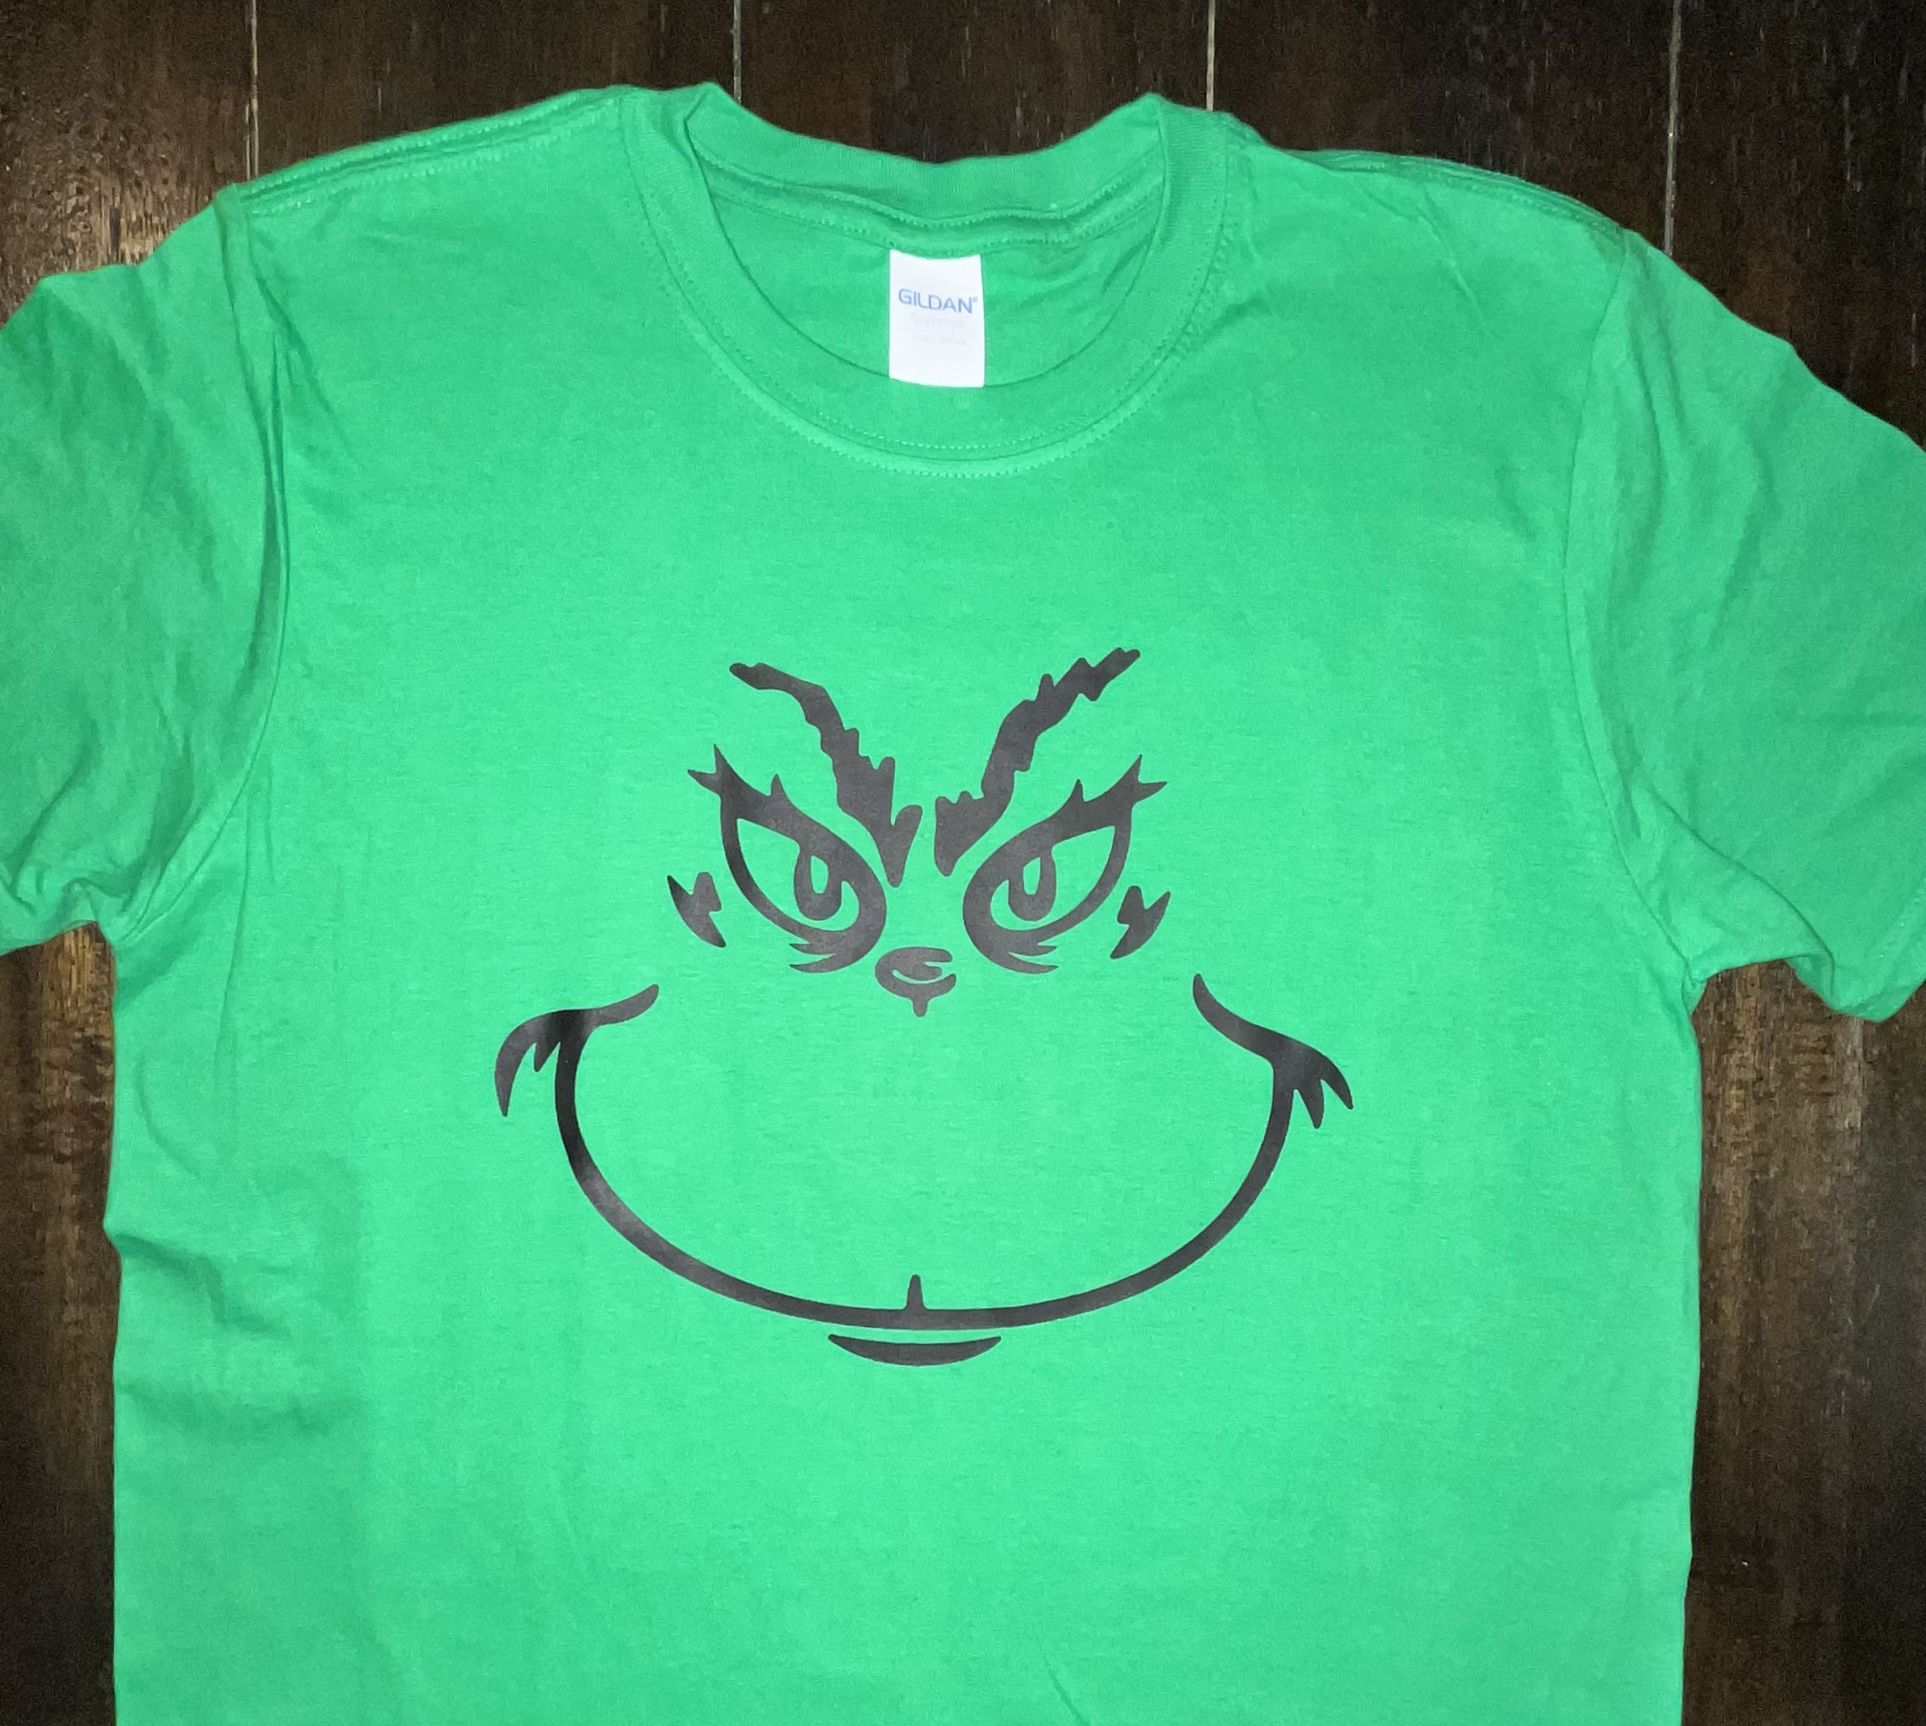 Grinch Shirt $8 Sz Med